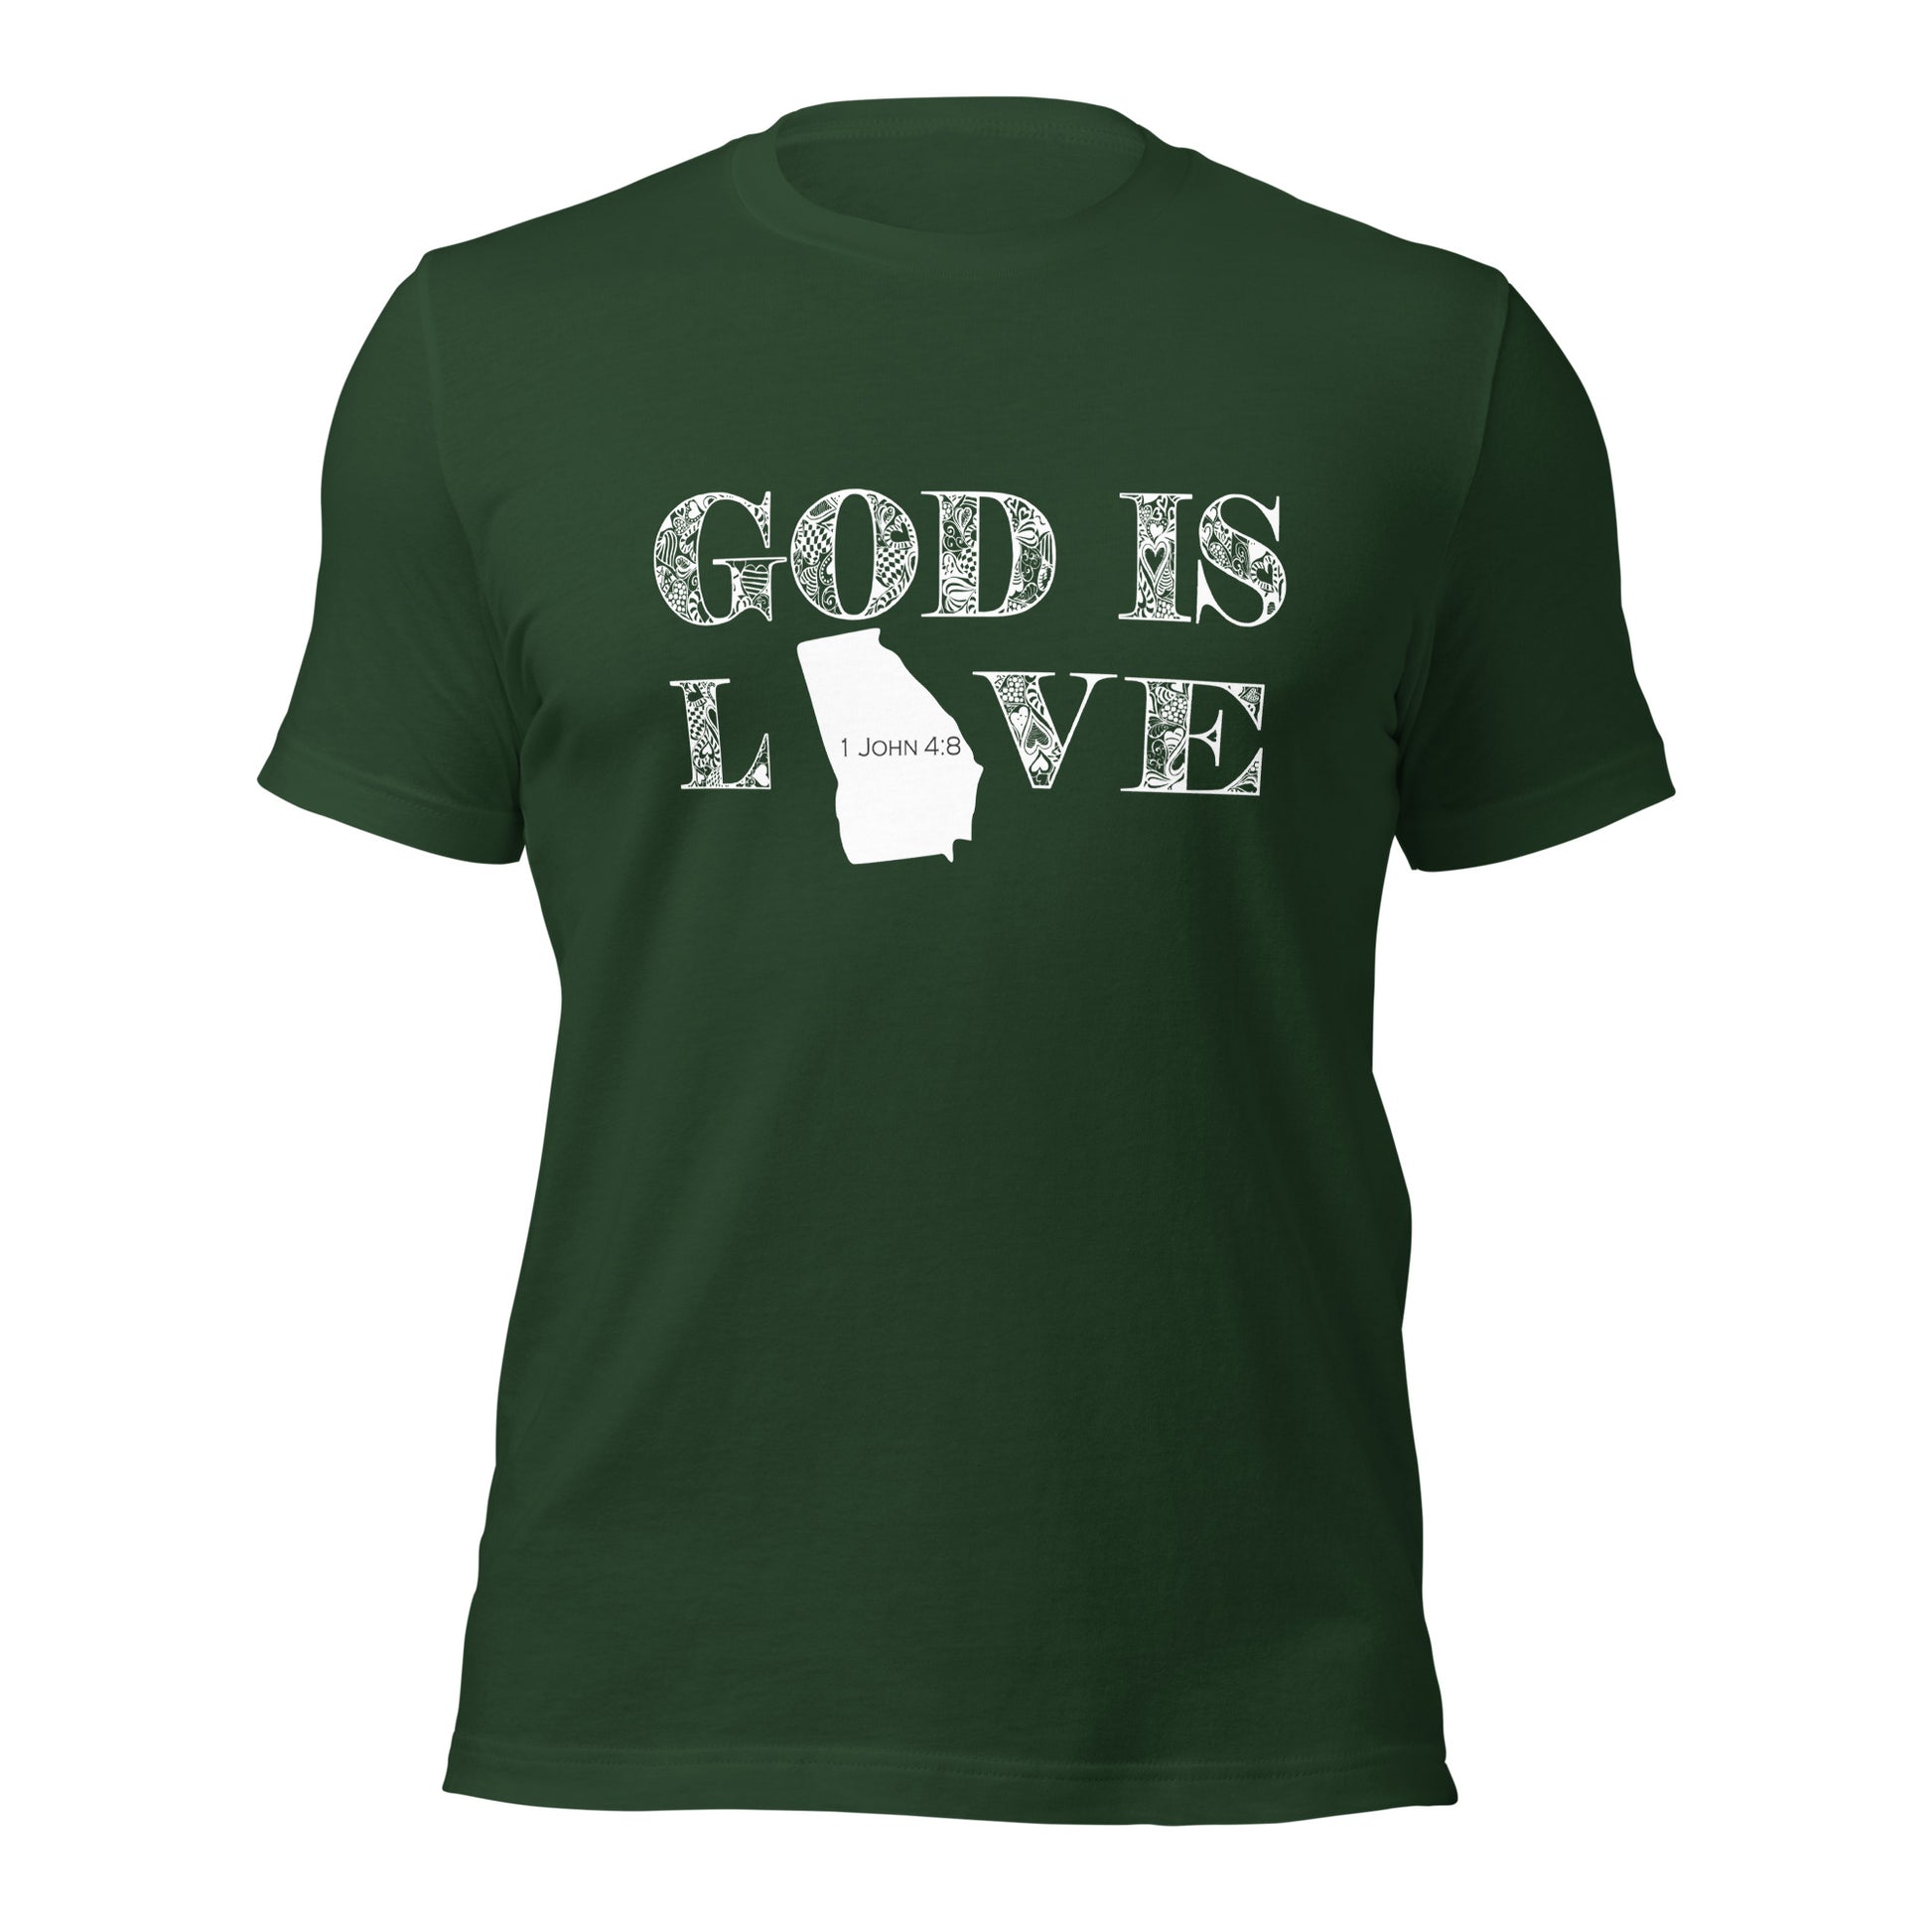 1 John 4:8 God is love Georgia T-shirt forest